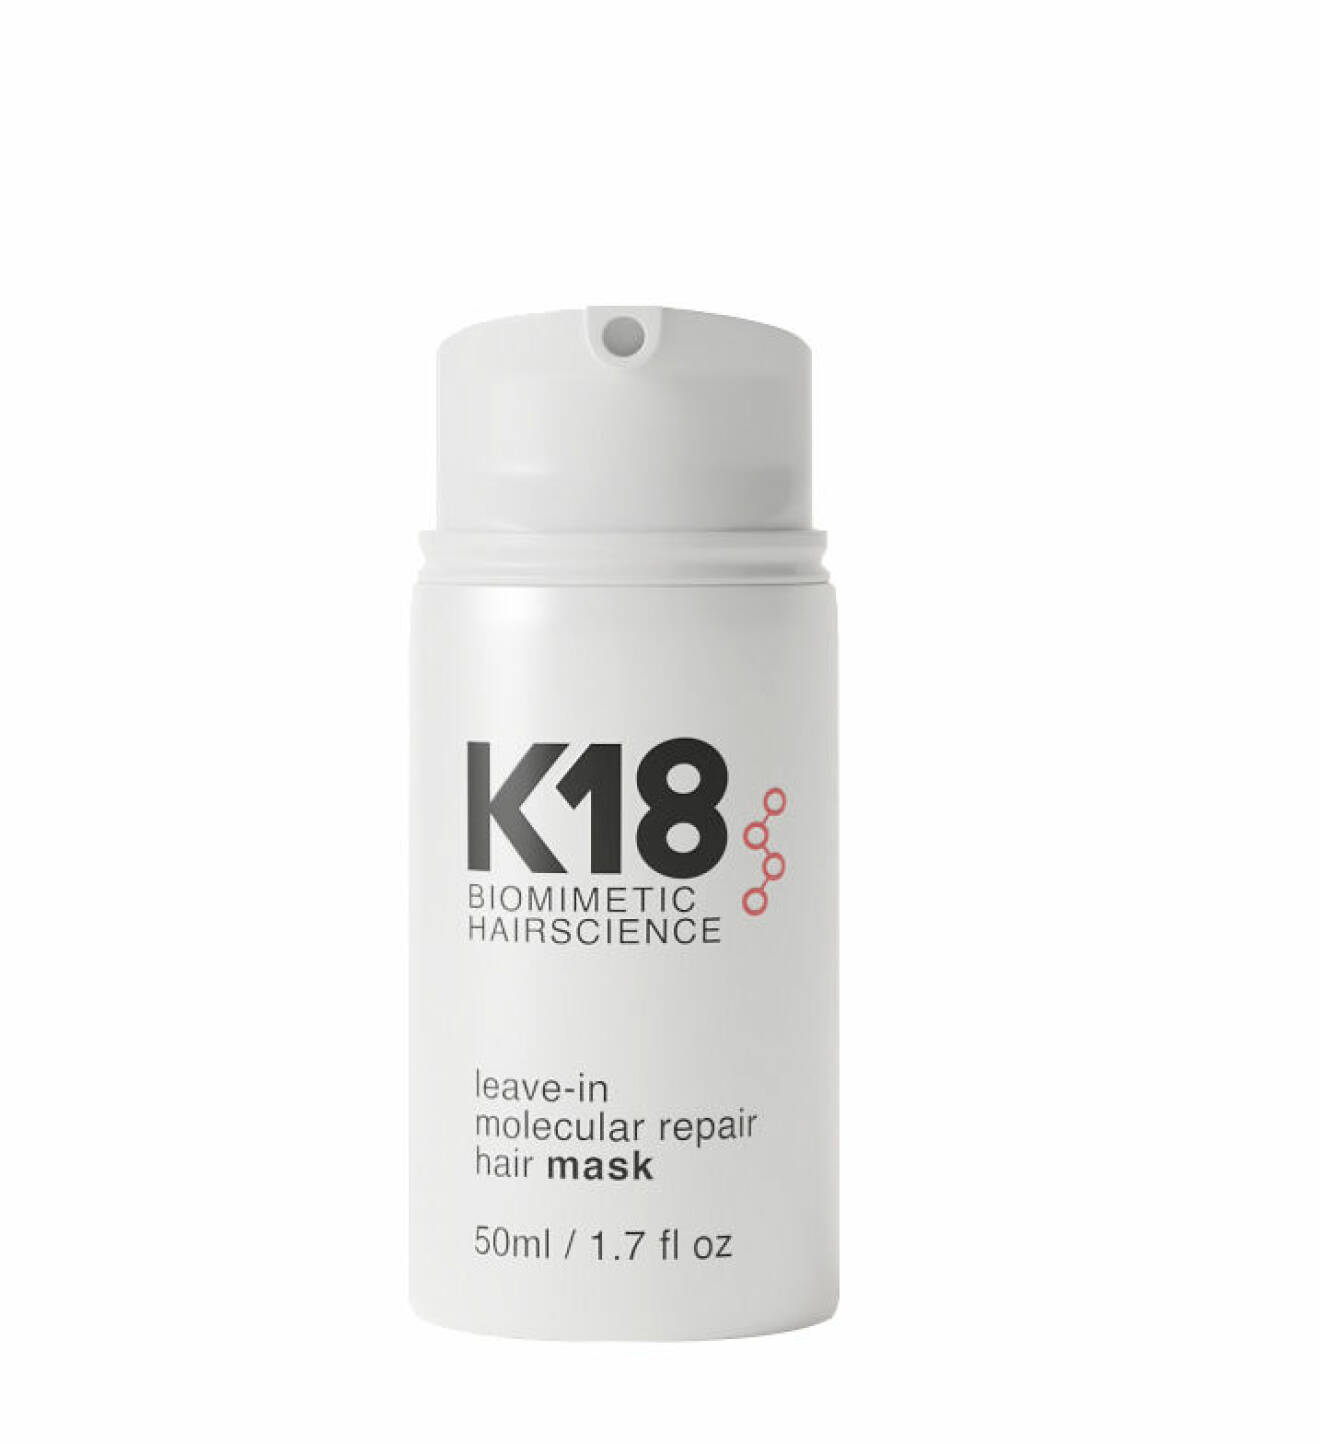 K18 Leave-in molecular reapir hair mask.